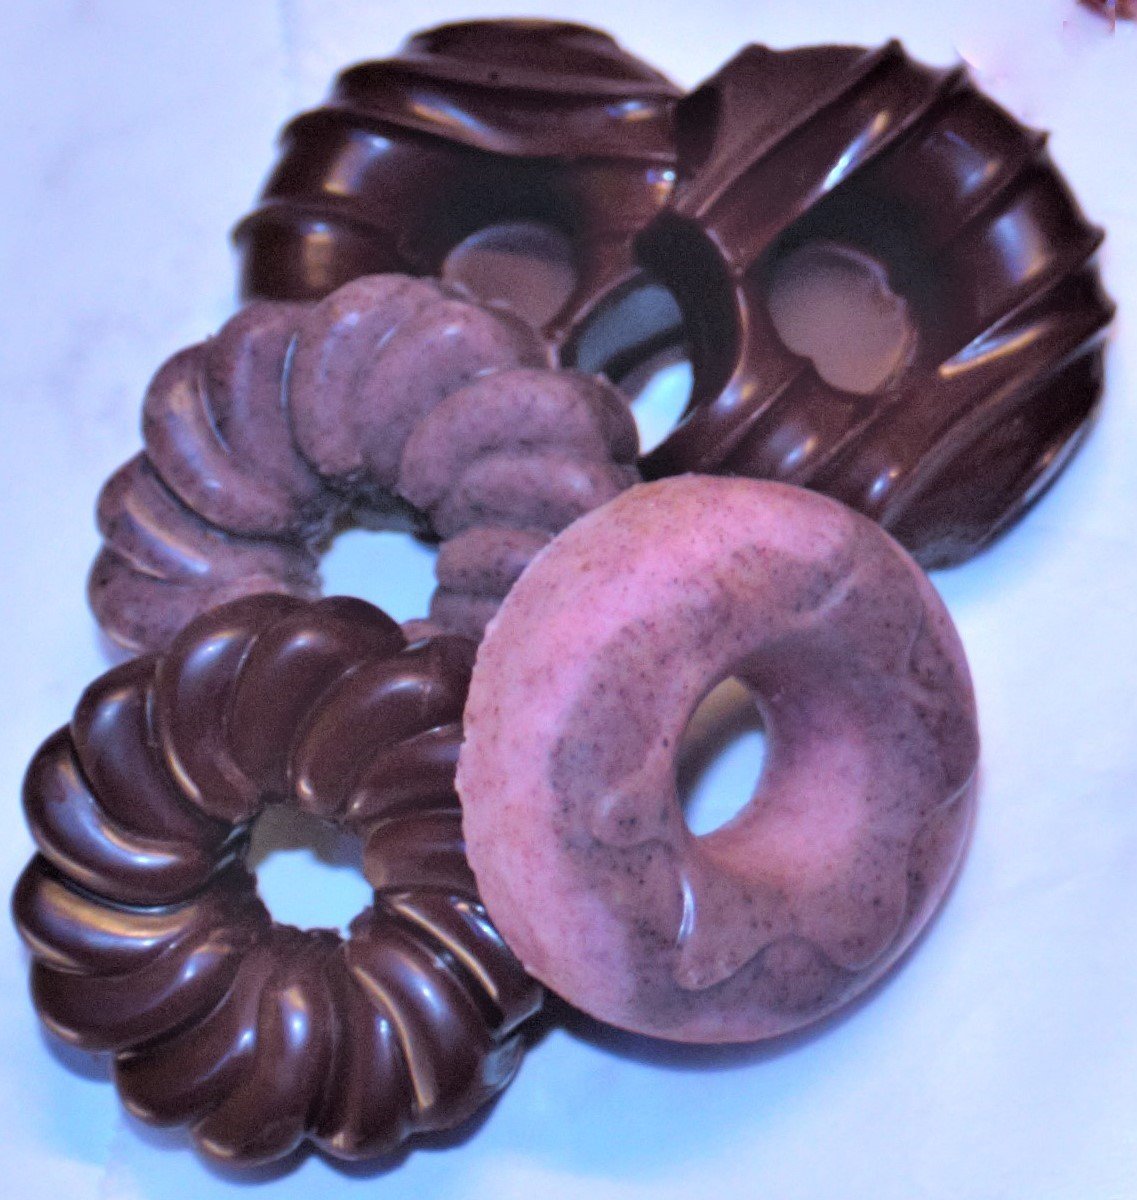 Molded chocolates donuts.jpg